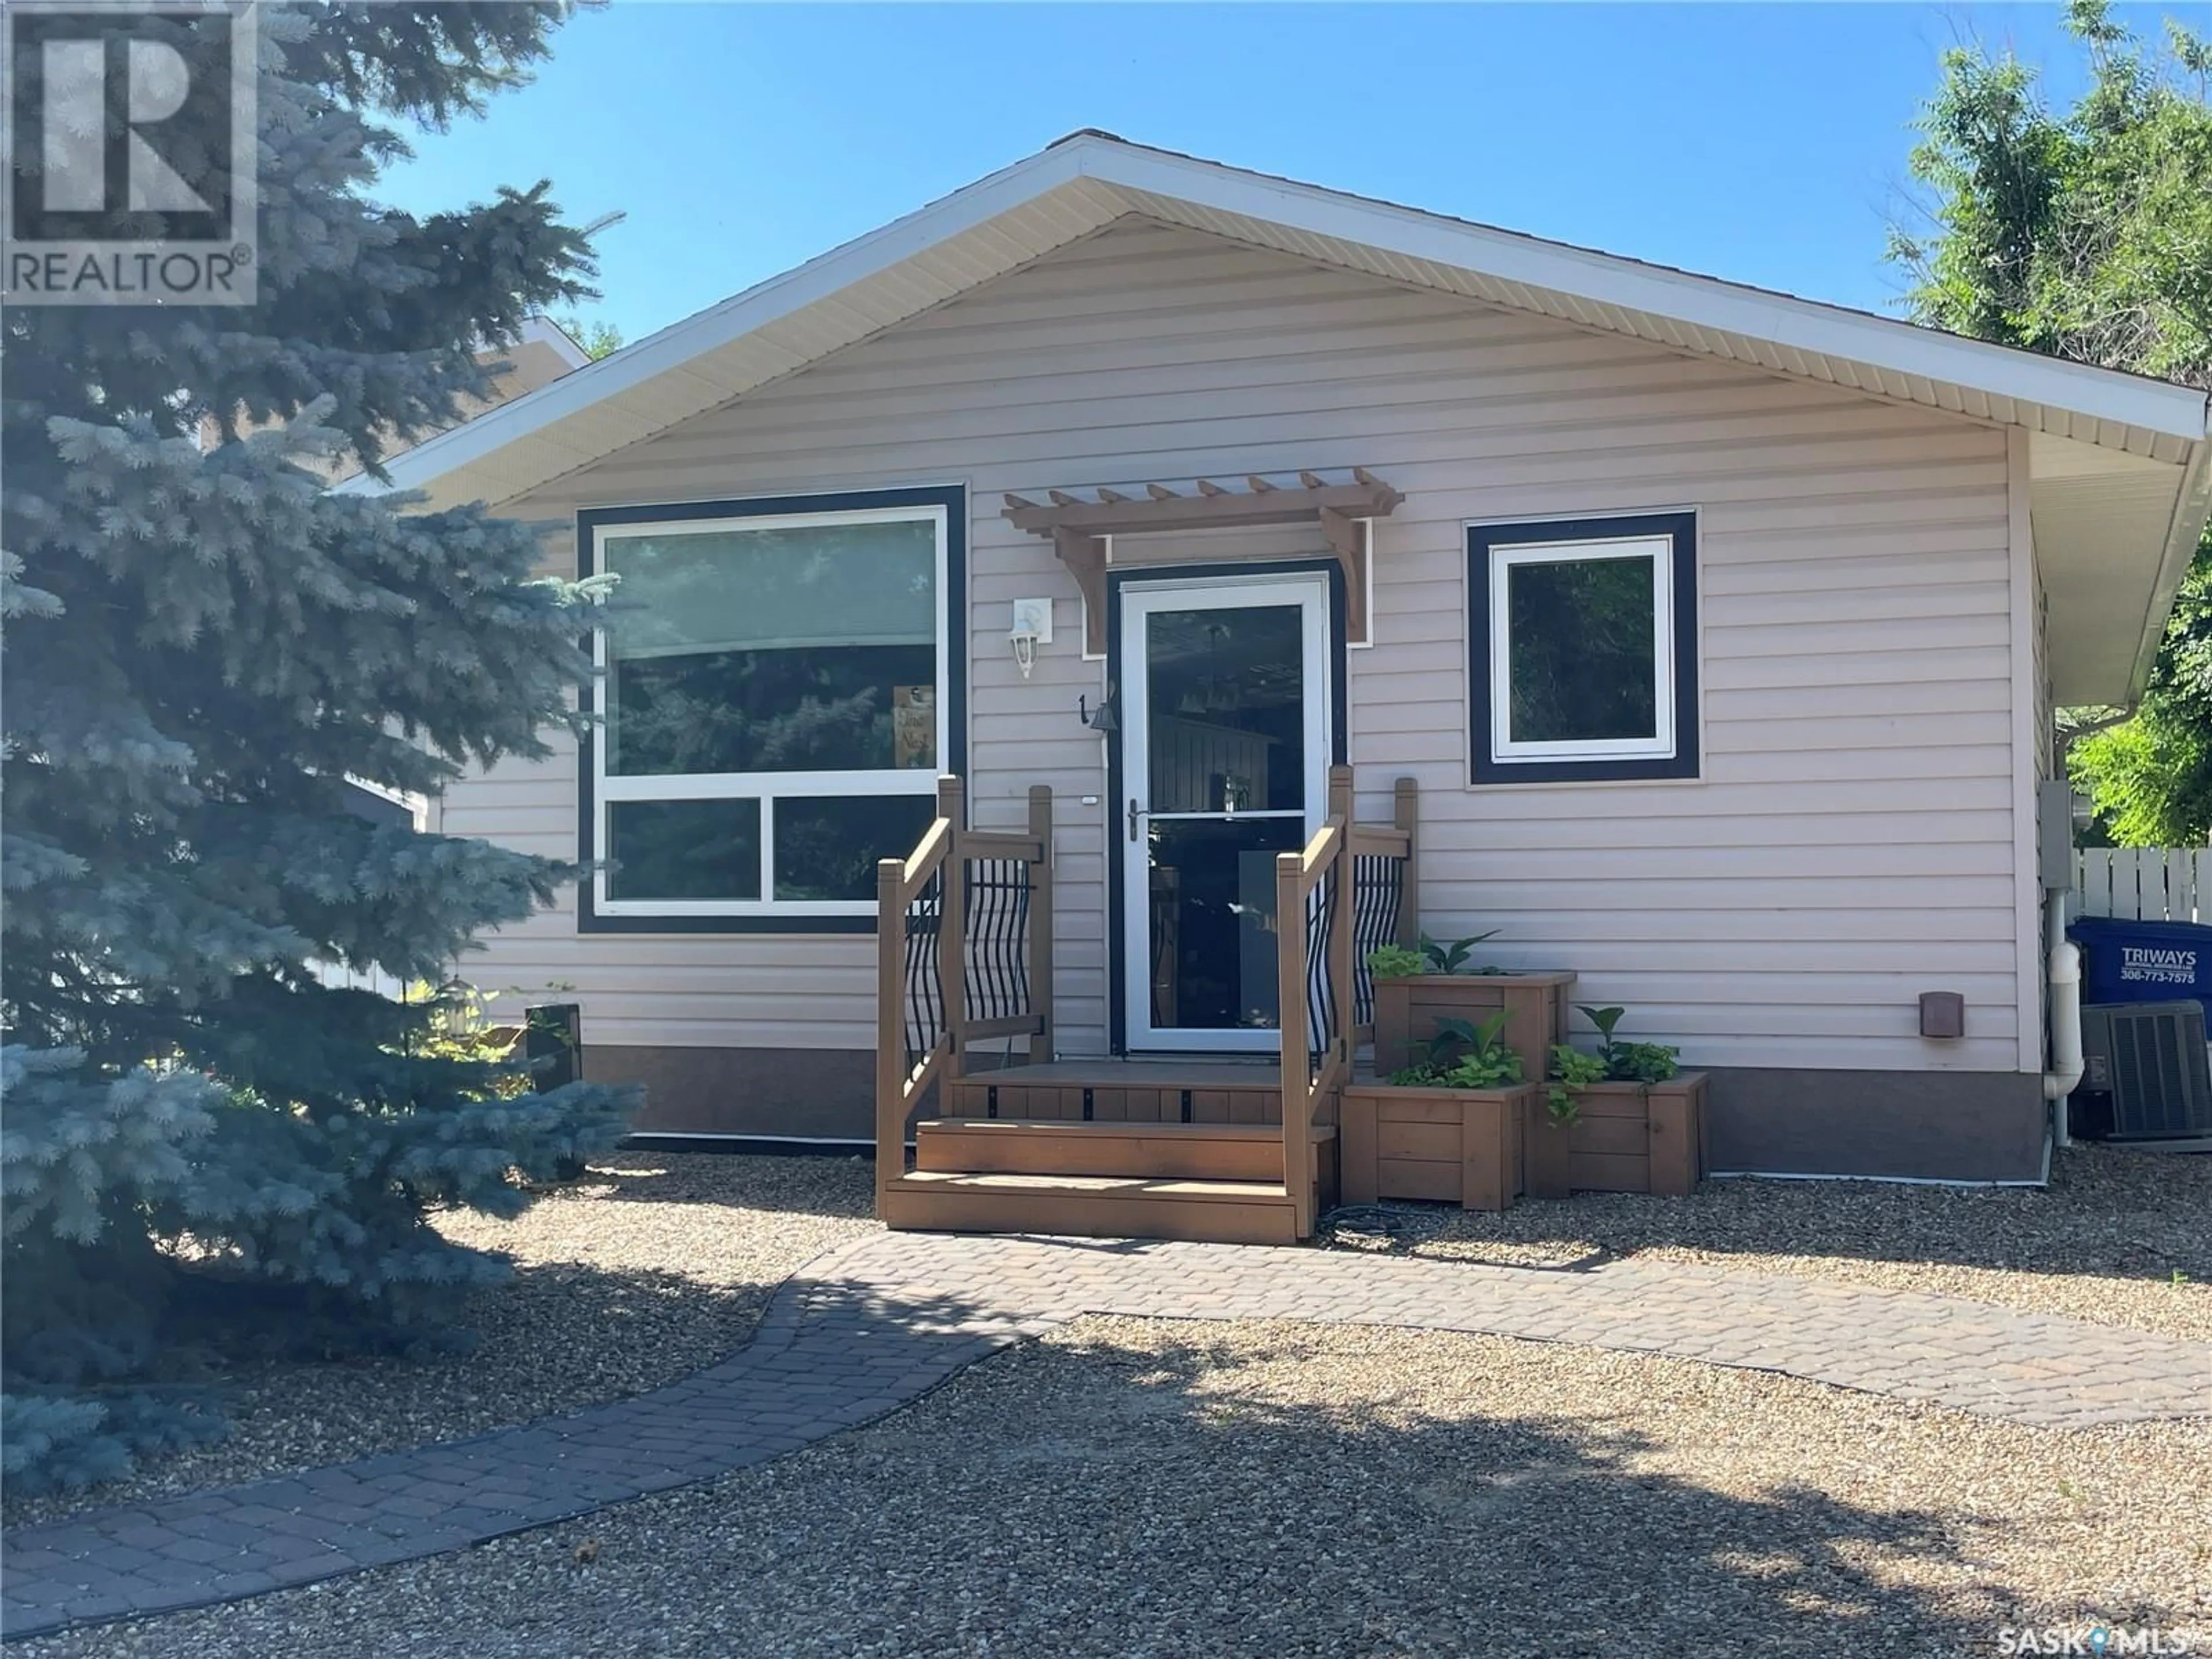 Home with vinyl exterior material for 1 1st AVENUE, Maple Creek Saskatchewan S0N1N0